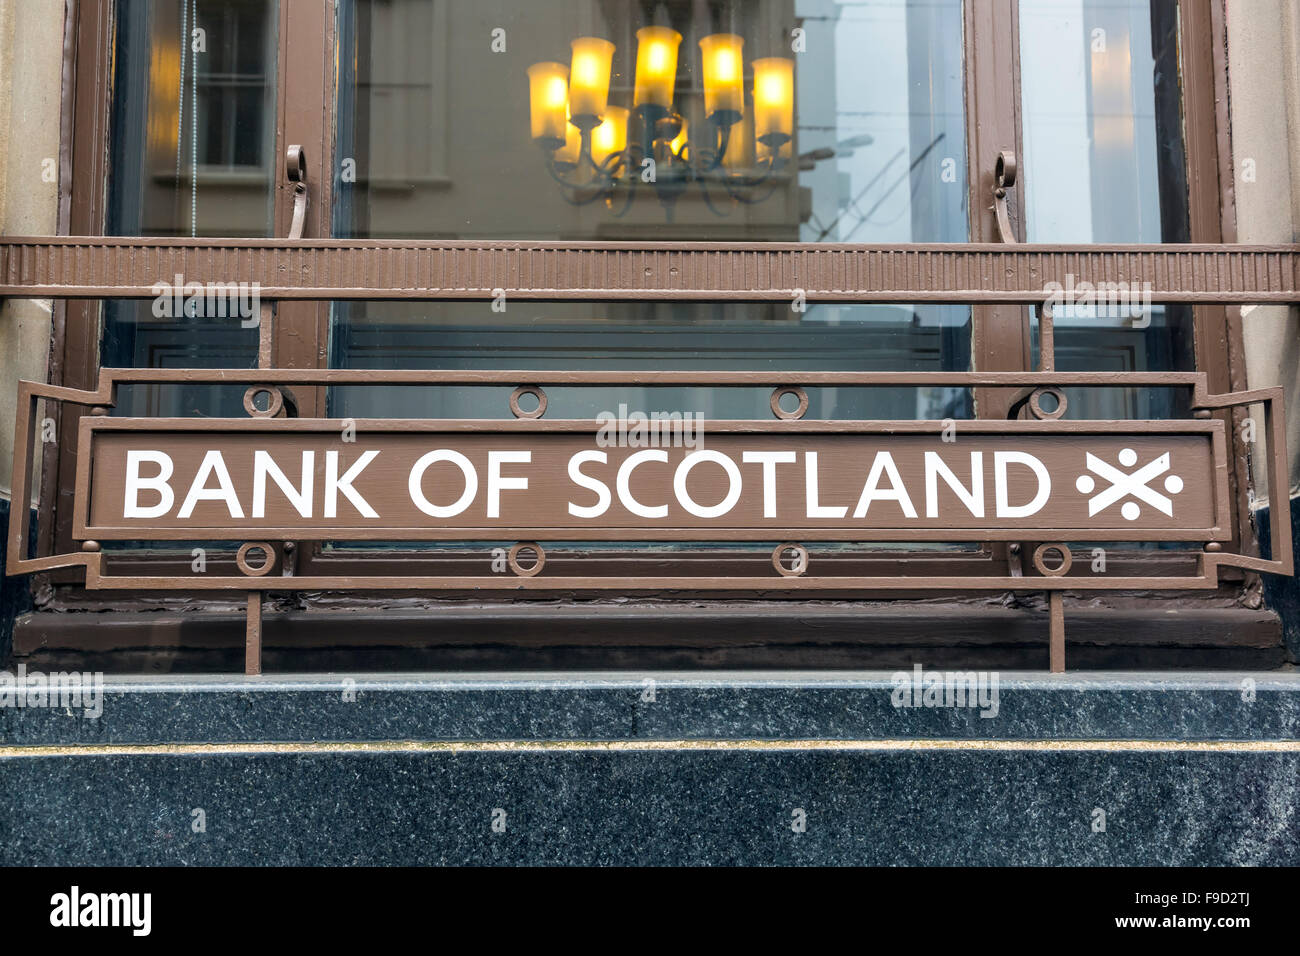 Bank of Scotland firma in una finestra, UK Foto Stock